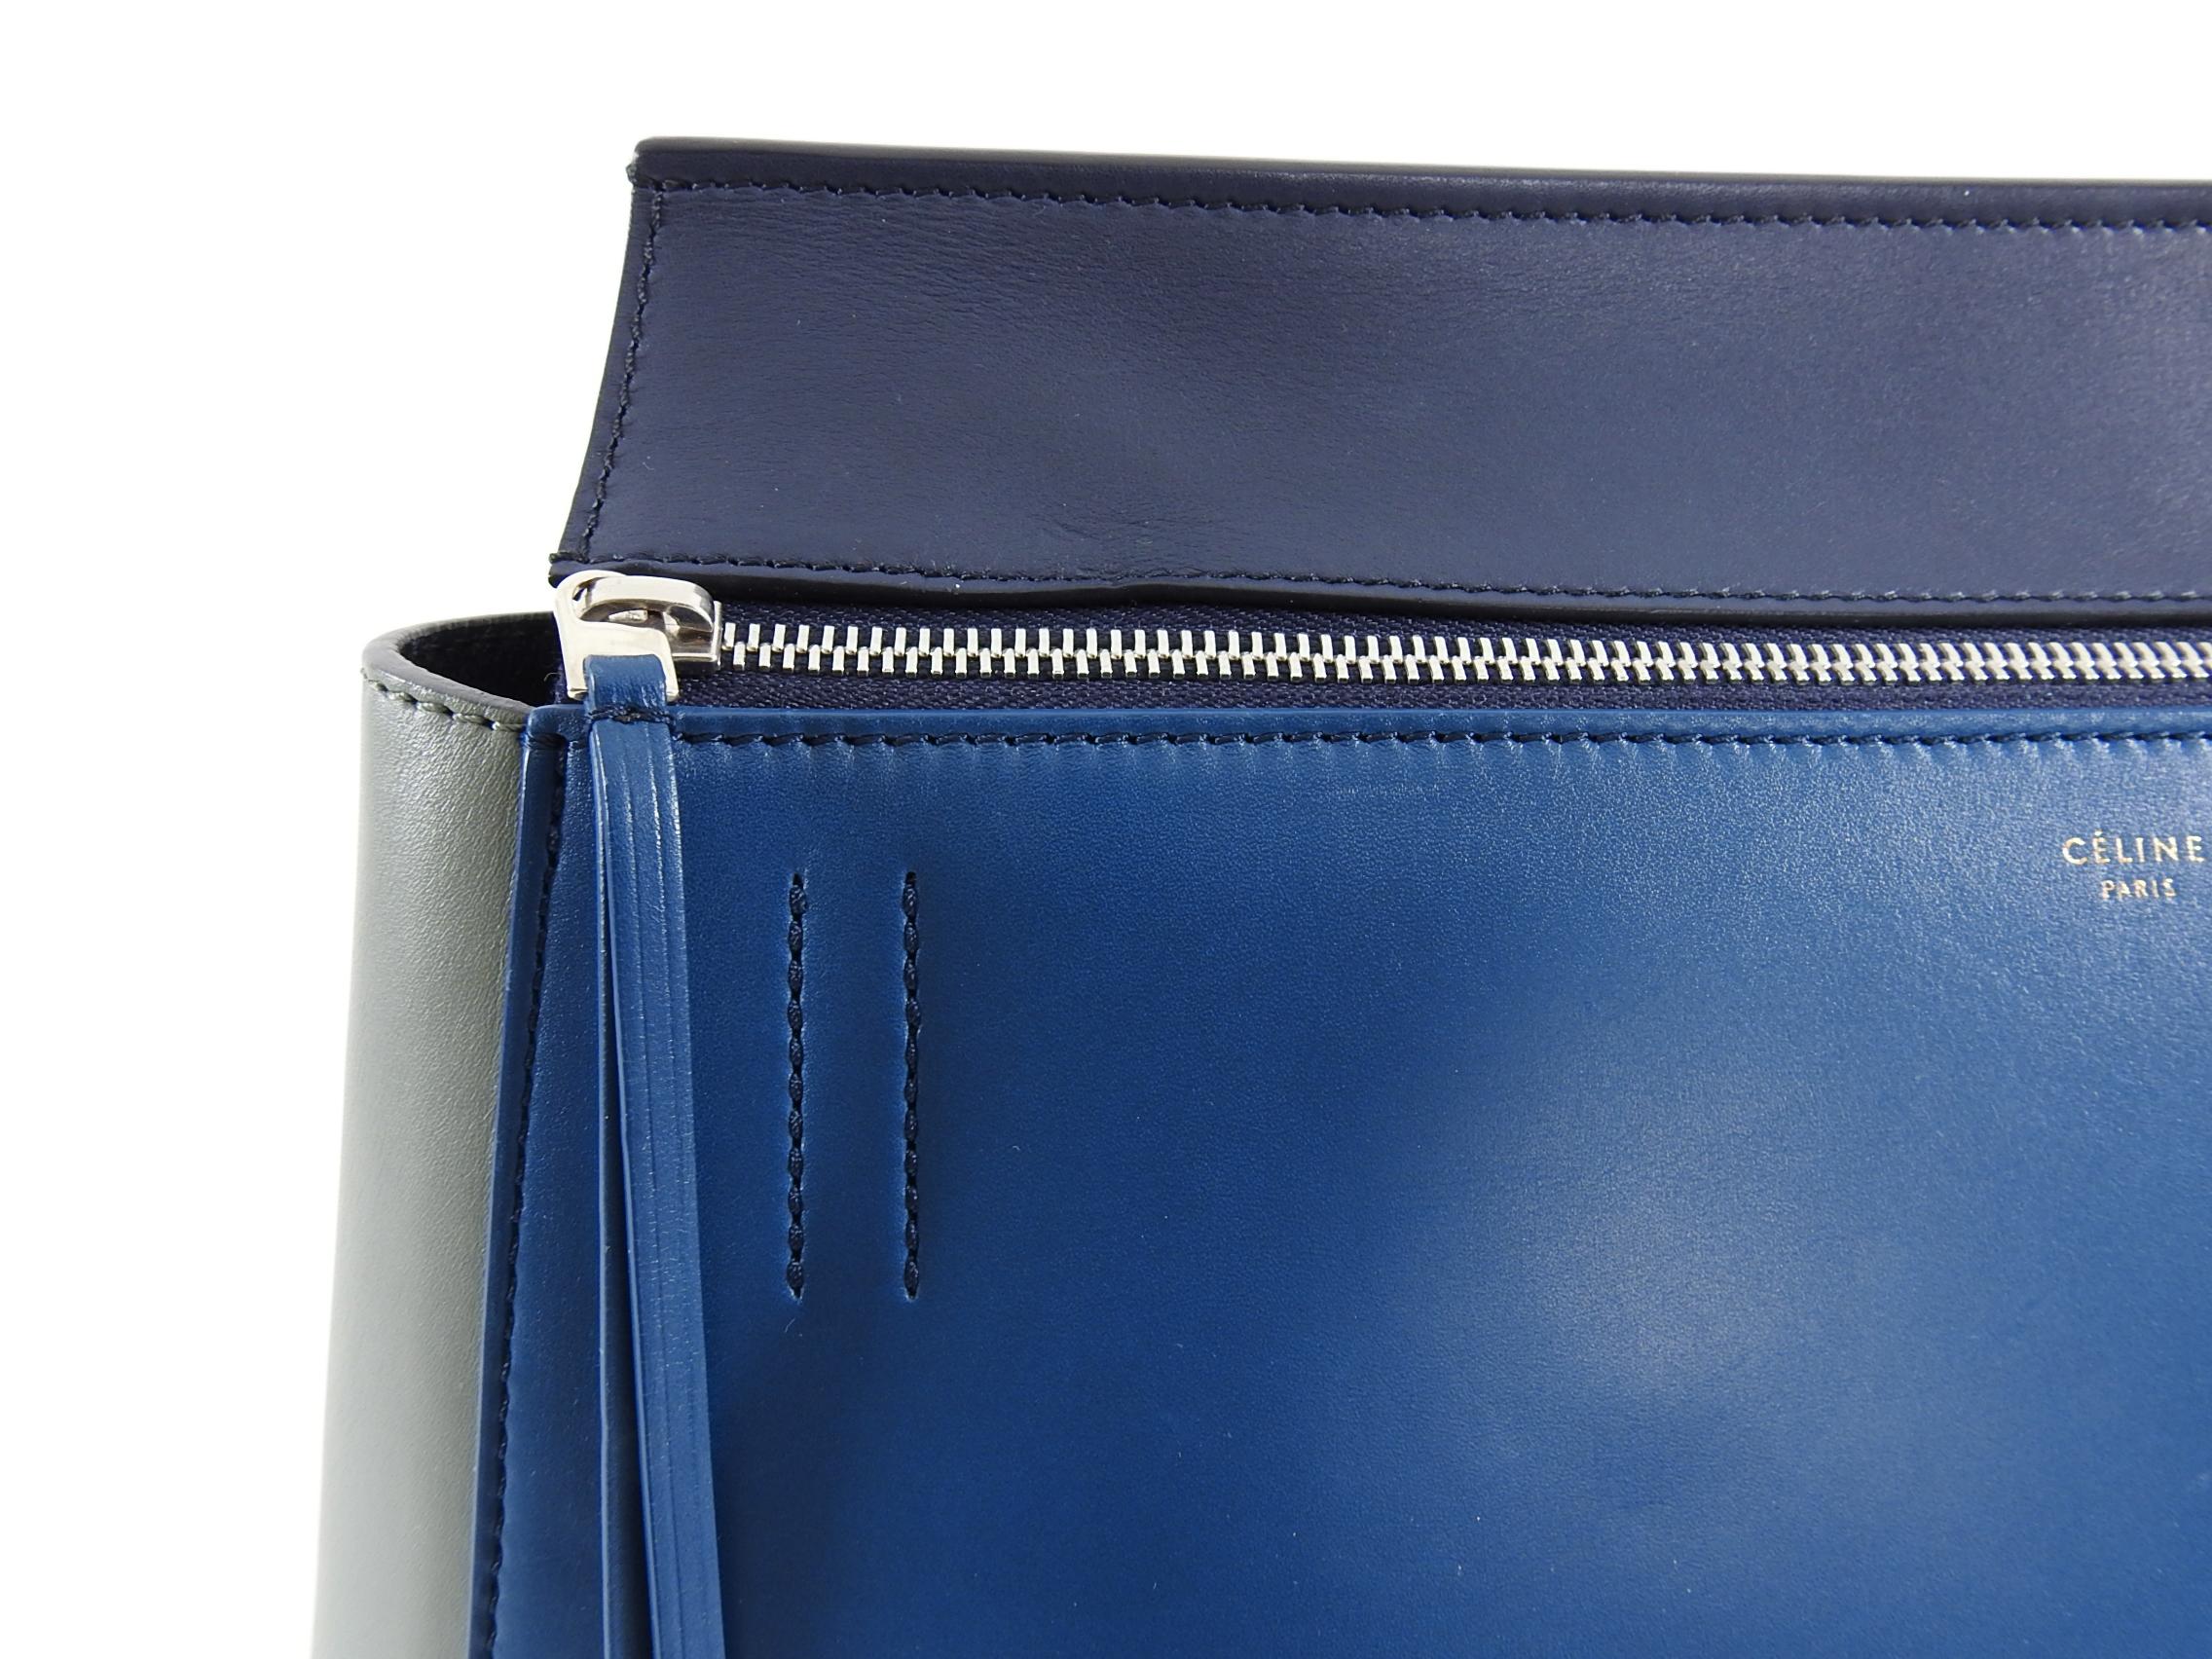 Celine Tricolor Blue Black Grey Small Edge Bag For Sale 2